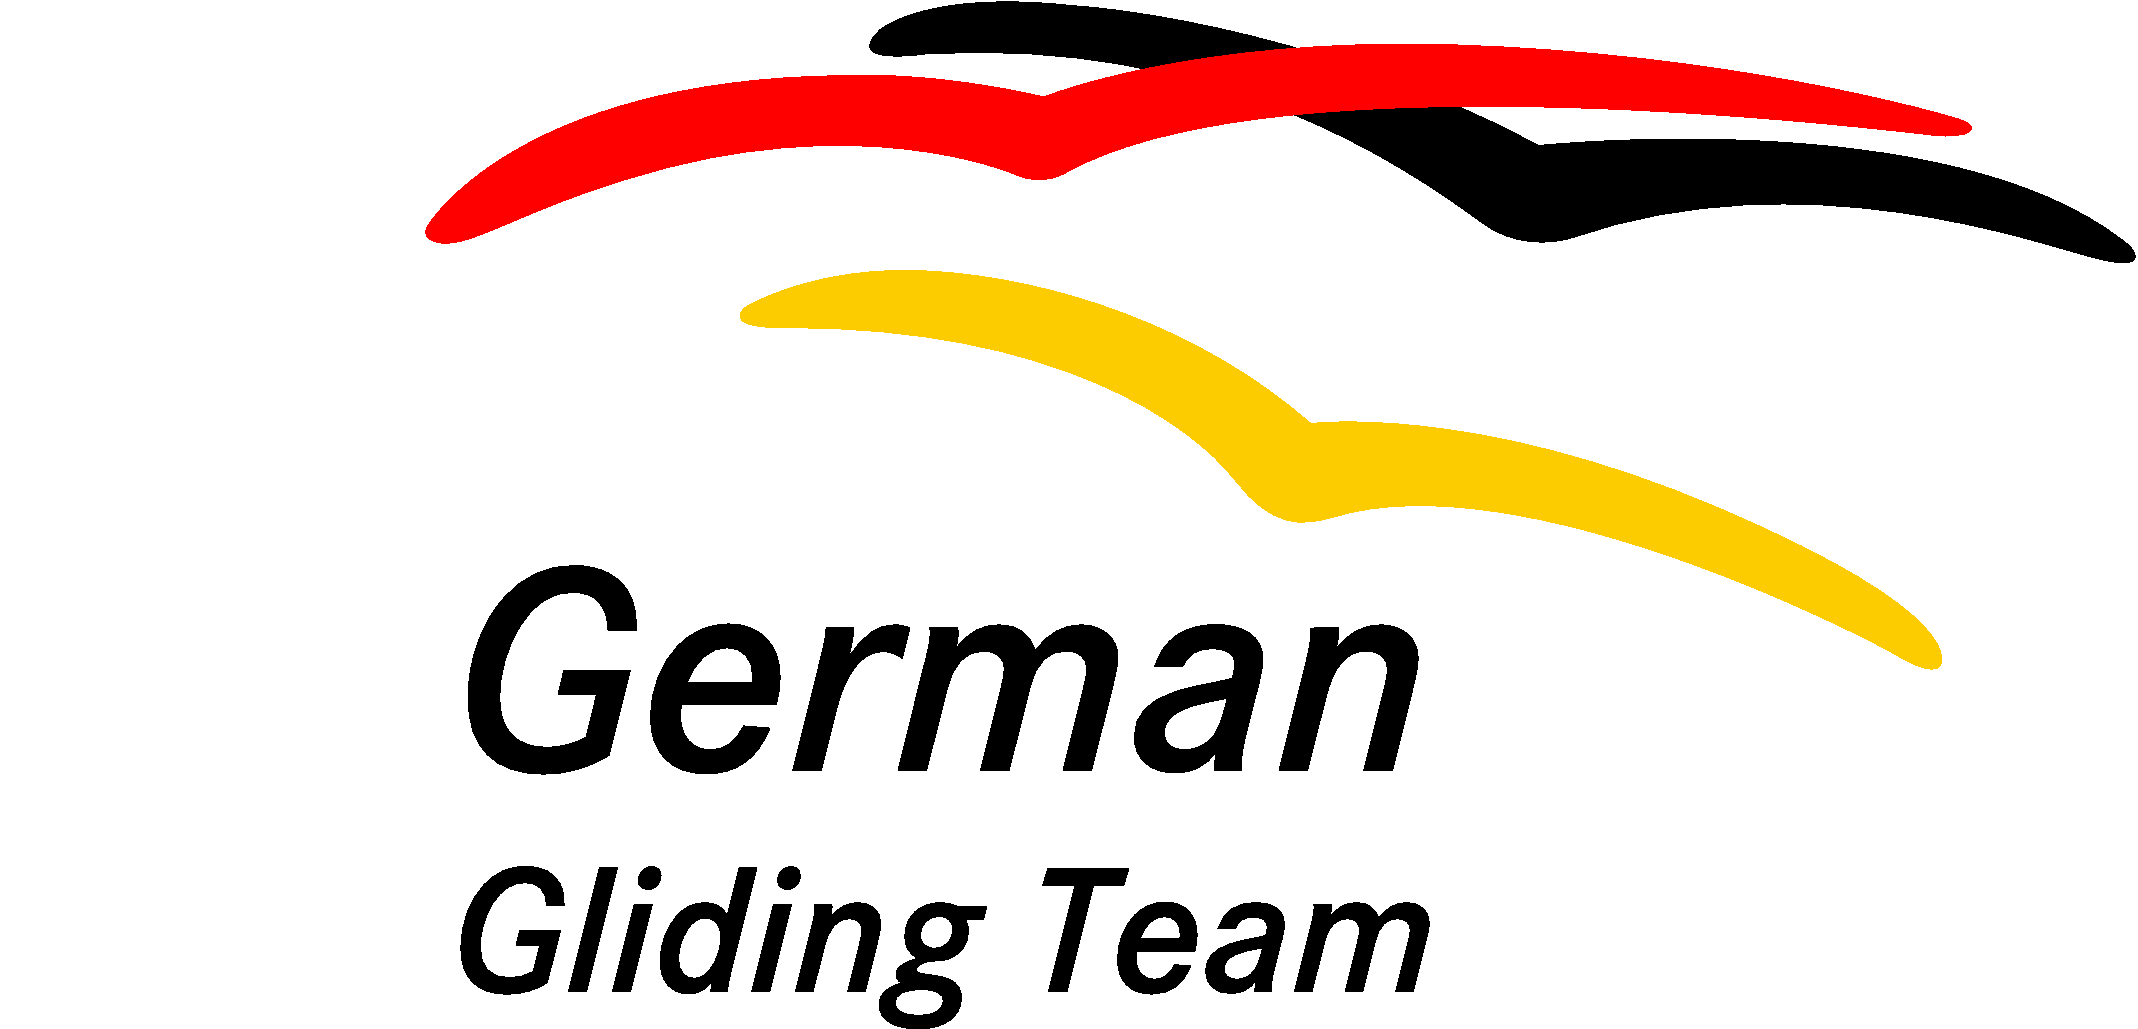 German Gliding Team